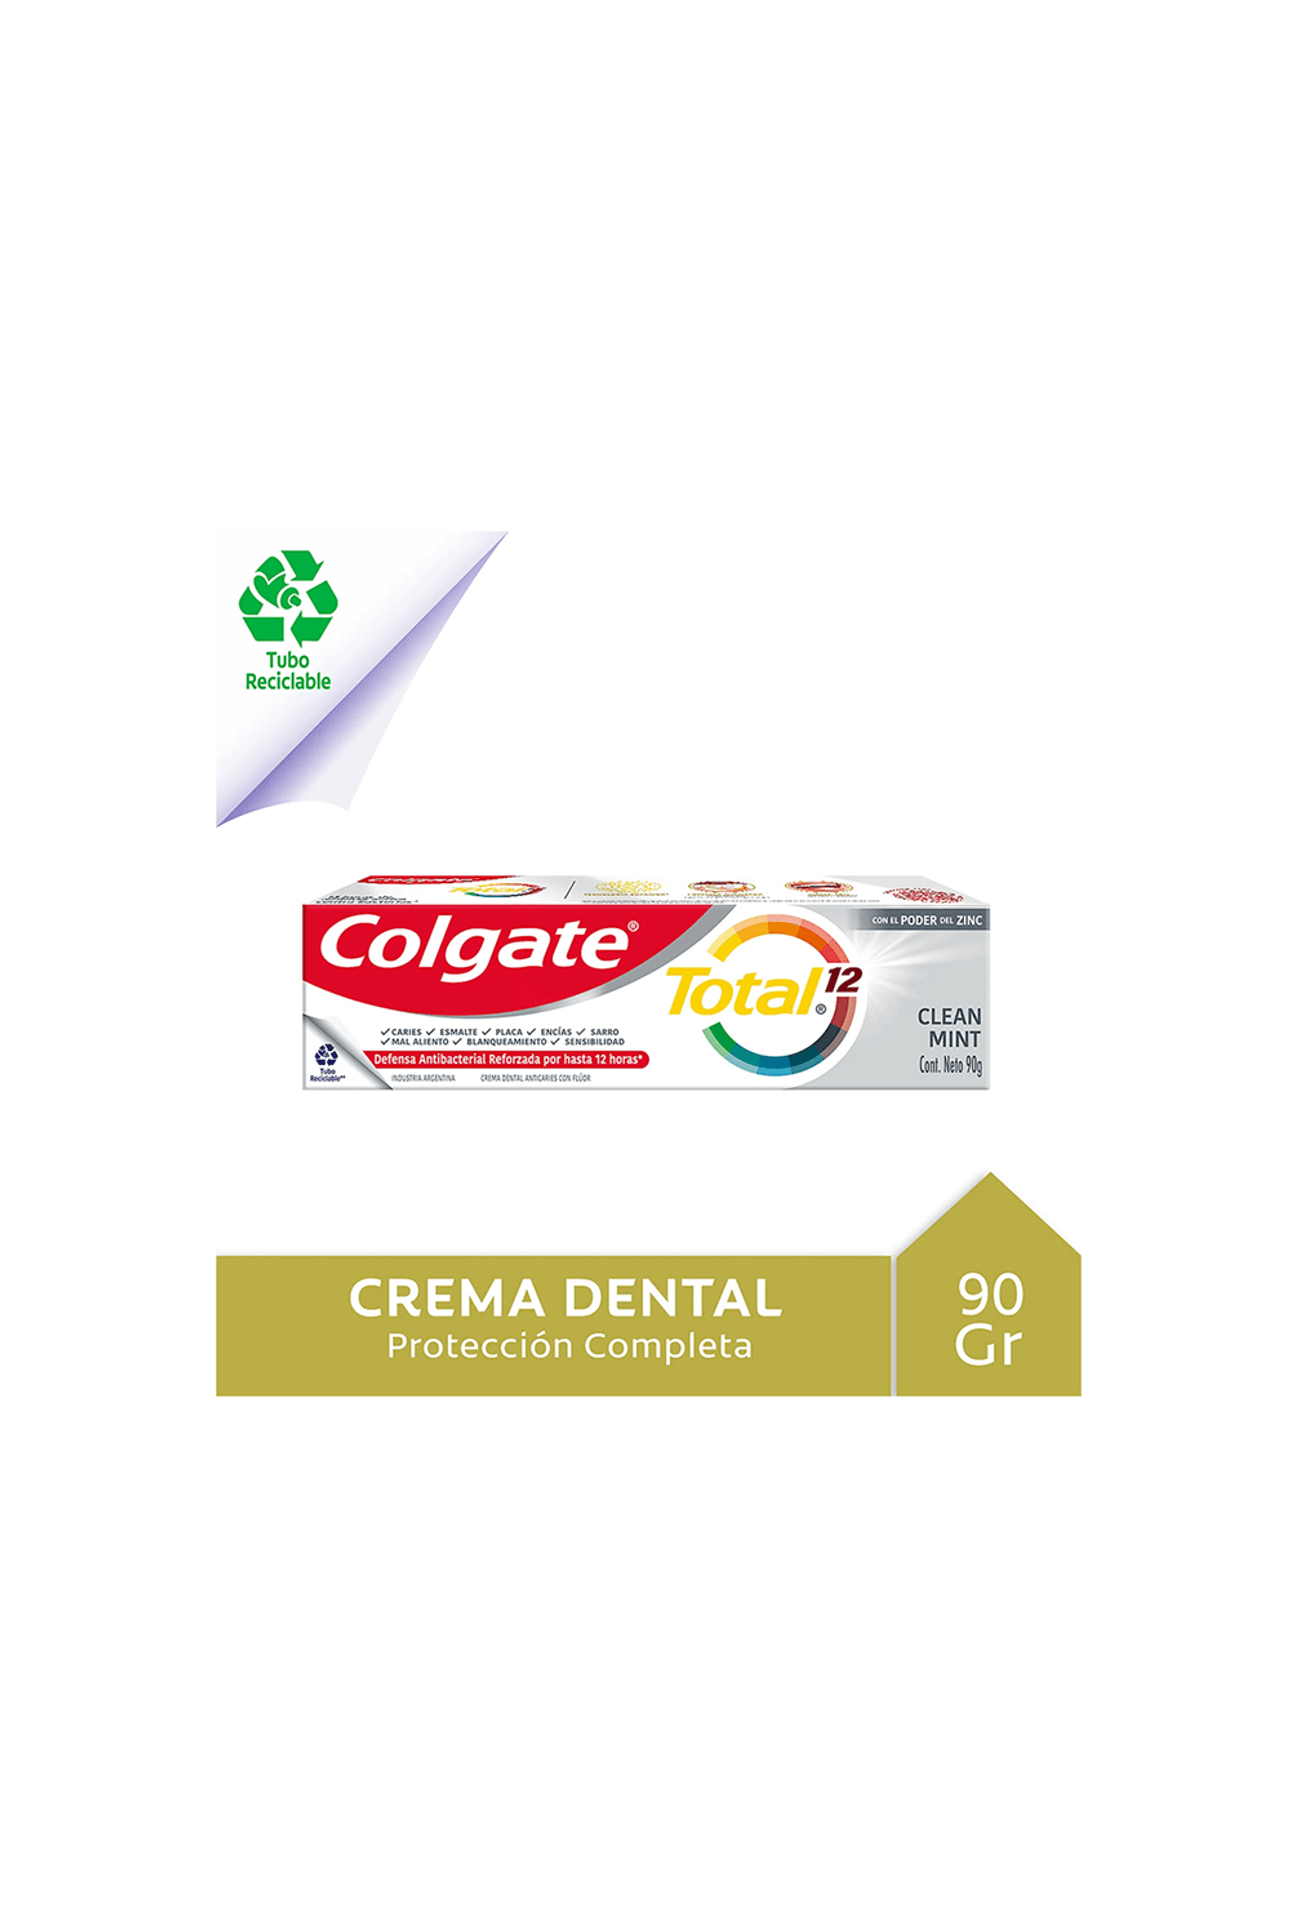 Colgate-Crema-Dental-Colgate-Clean-Mint-x-90-gr-7509546677651_img1